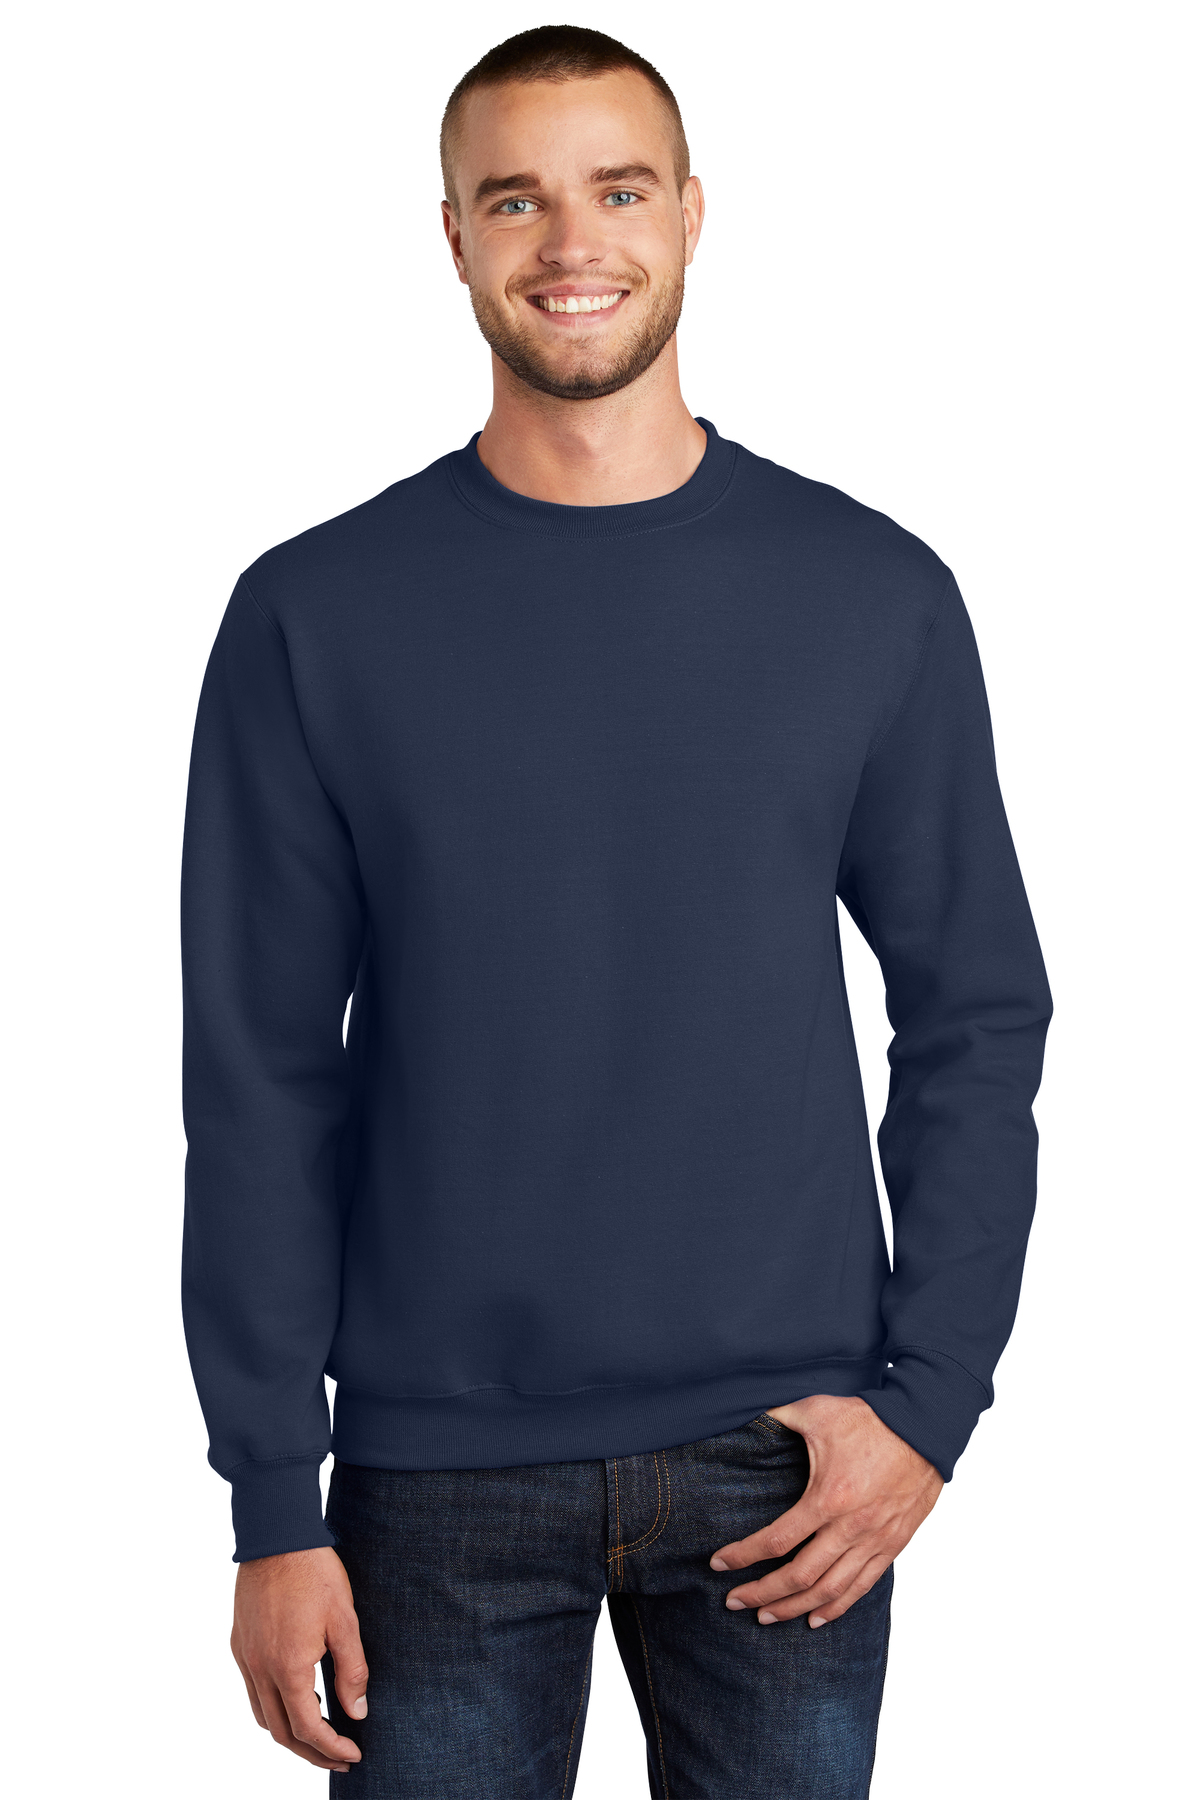 Port & Company Essential Fleece Crewneck Sweatshirt | Product | Port ...